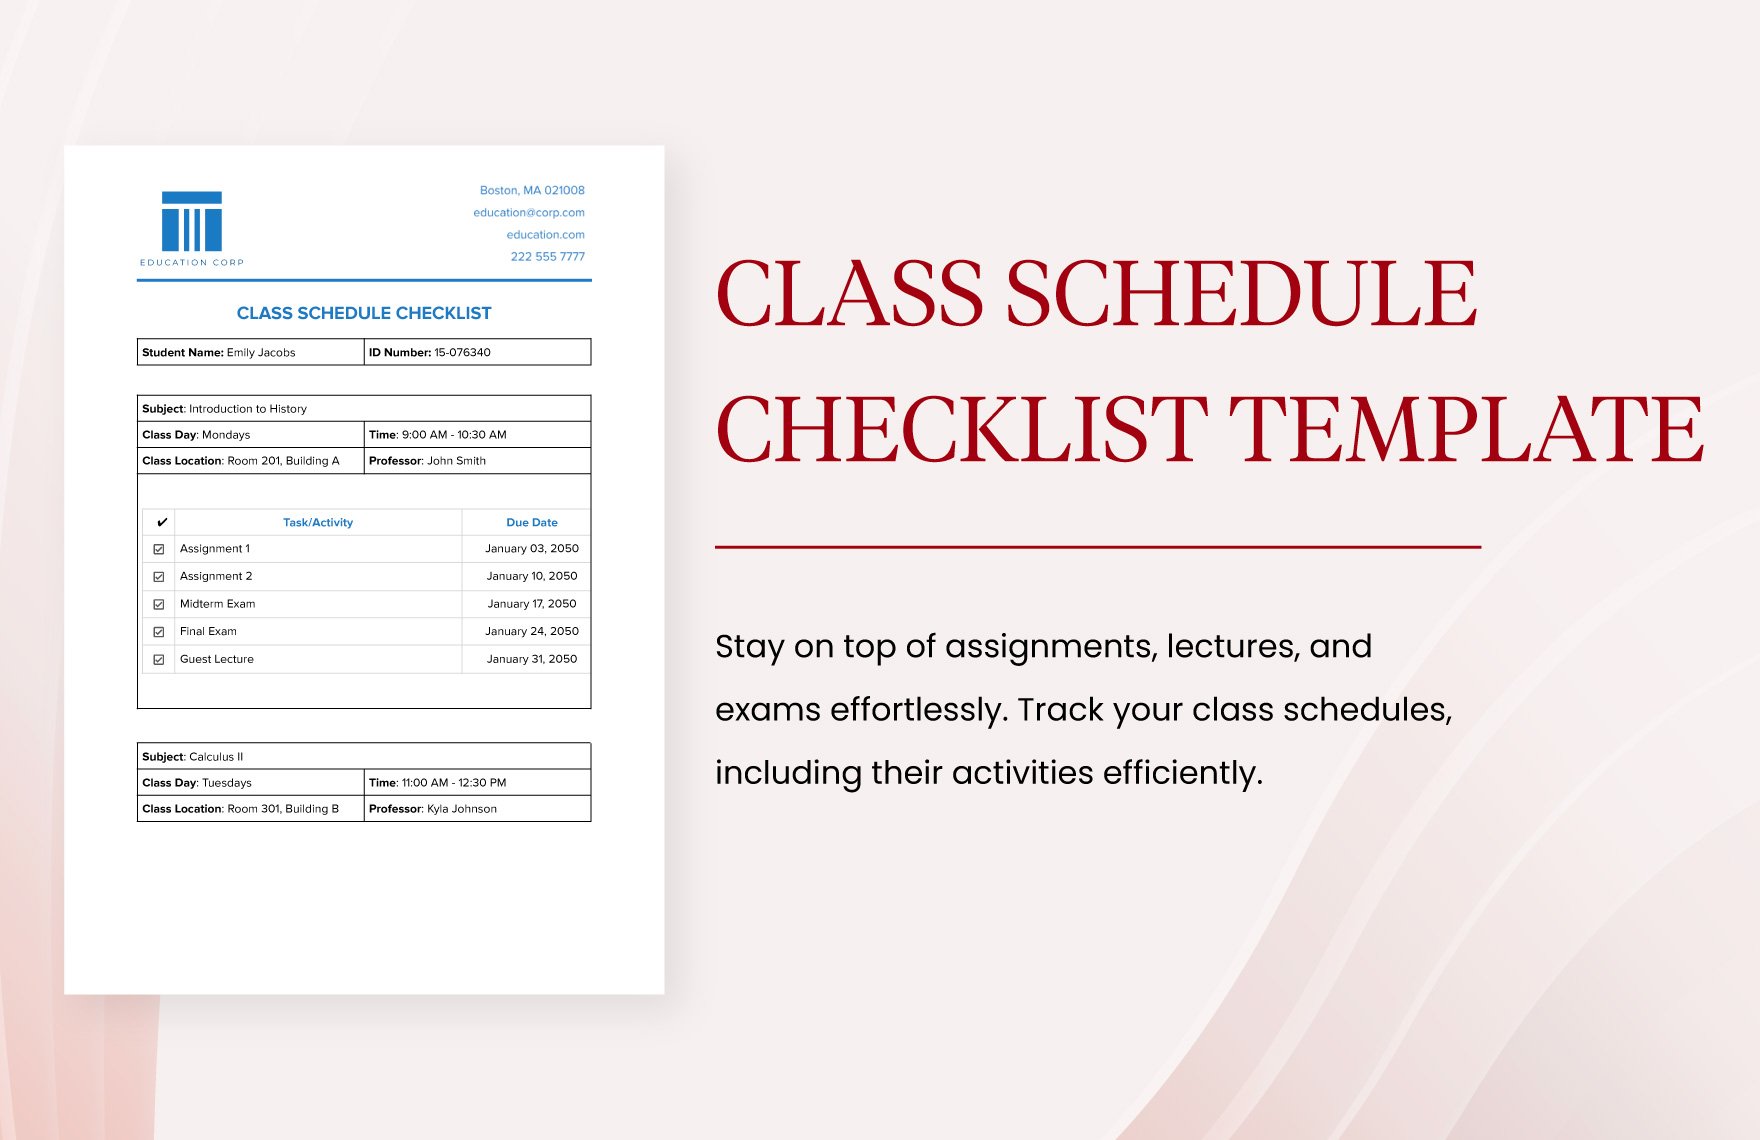 Class Schedule Checklist Template in Word, Google Docs, PDF